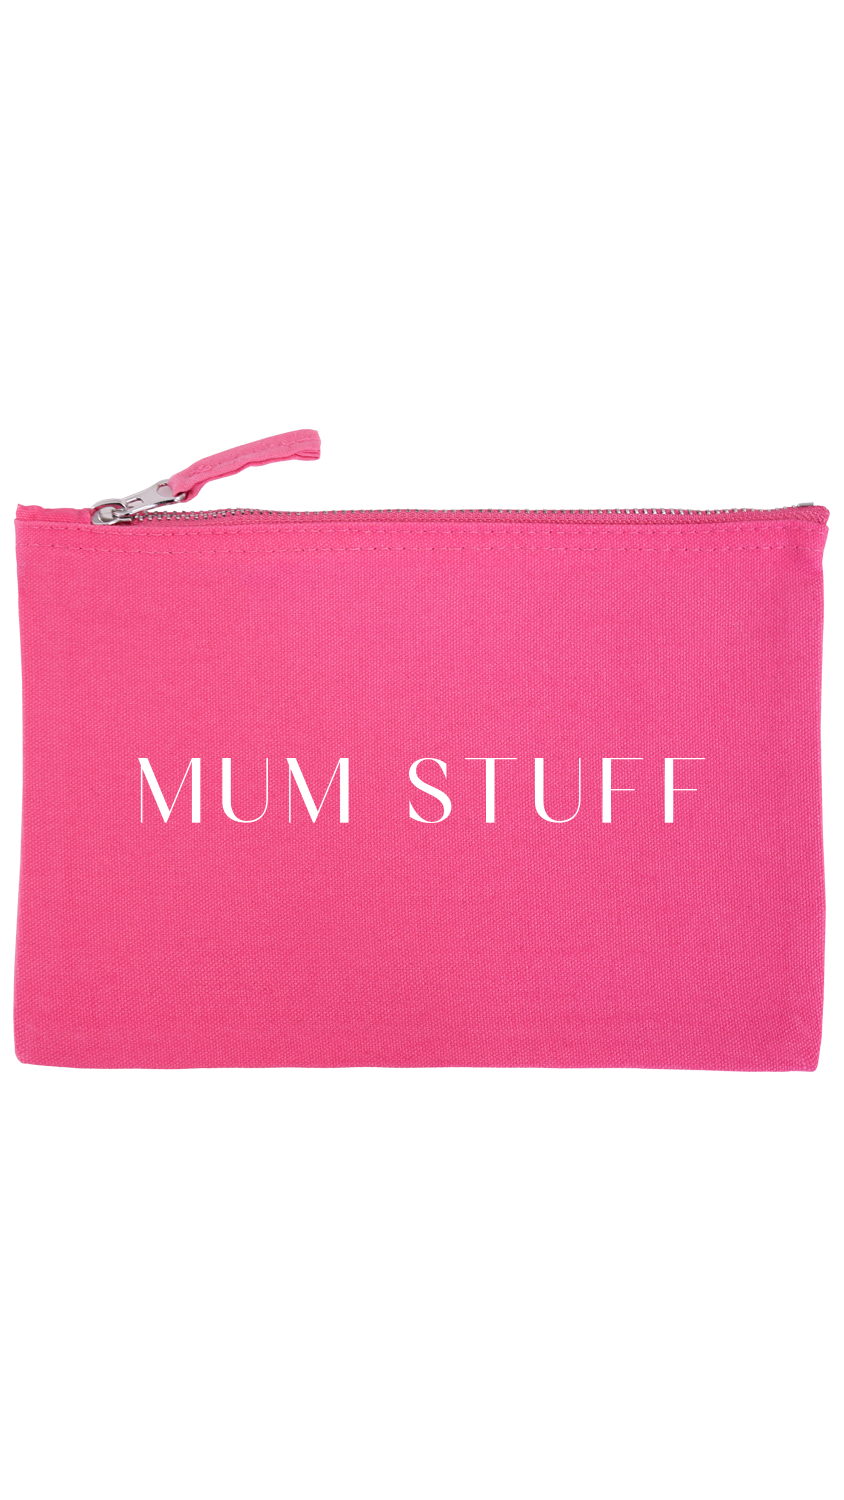 Mum stuff Mini bag